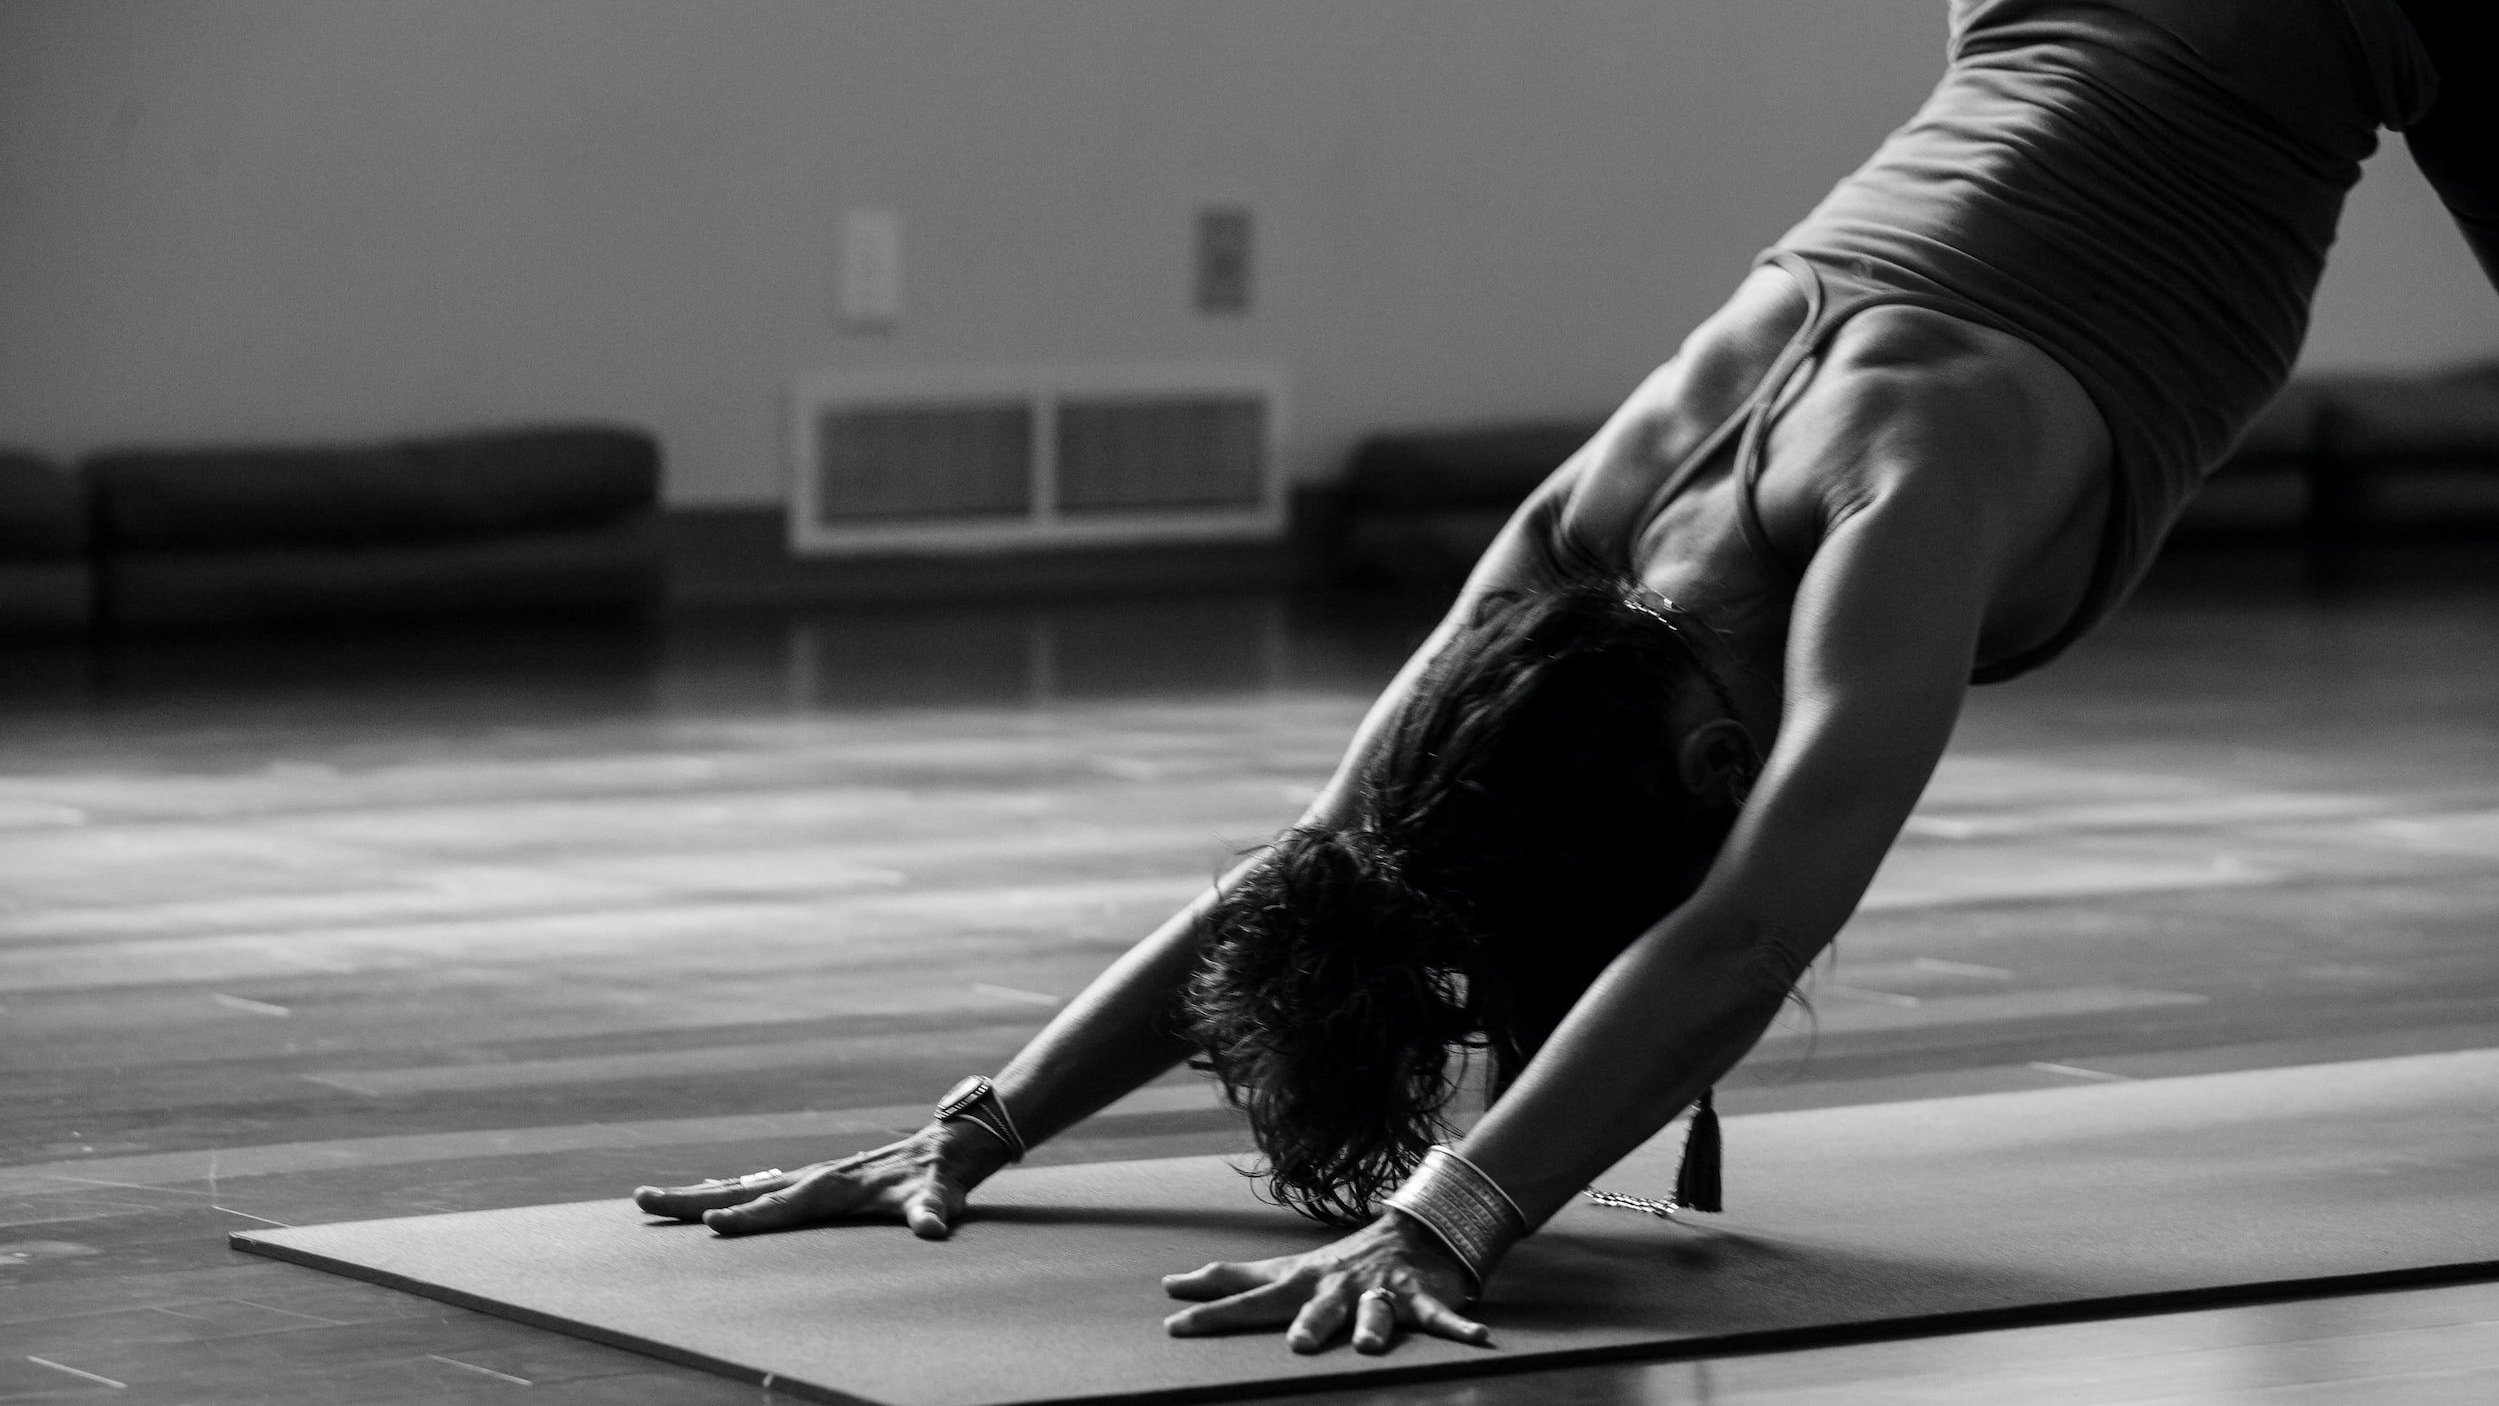 Lauren Ashtanga Yoga